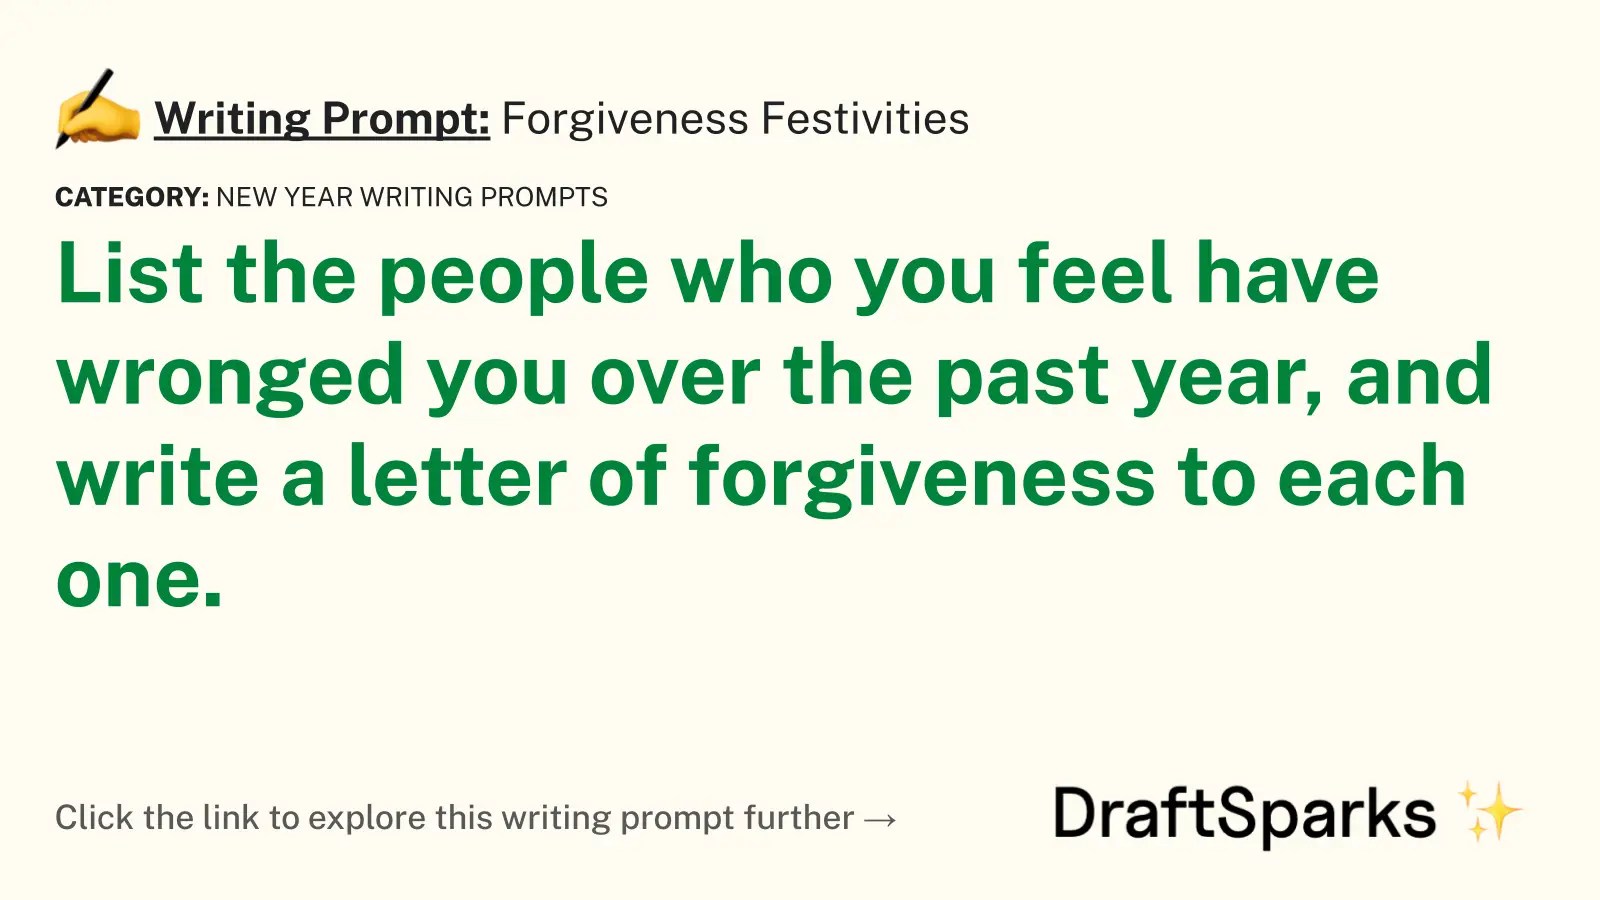 Forgiveness Festivities